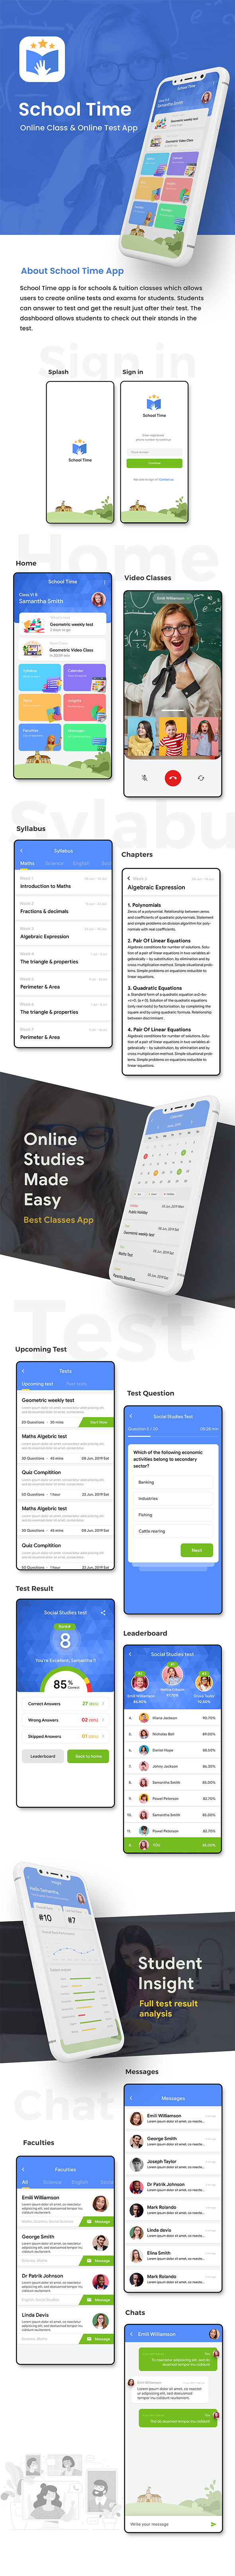 4App Template| Online Class App Coaching App Online Exam eLearning App| Online Study App School Time - 3